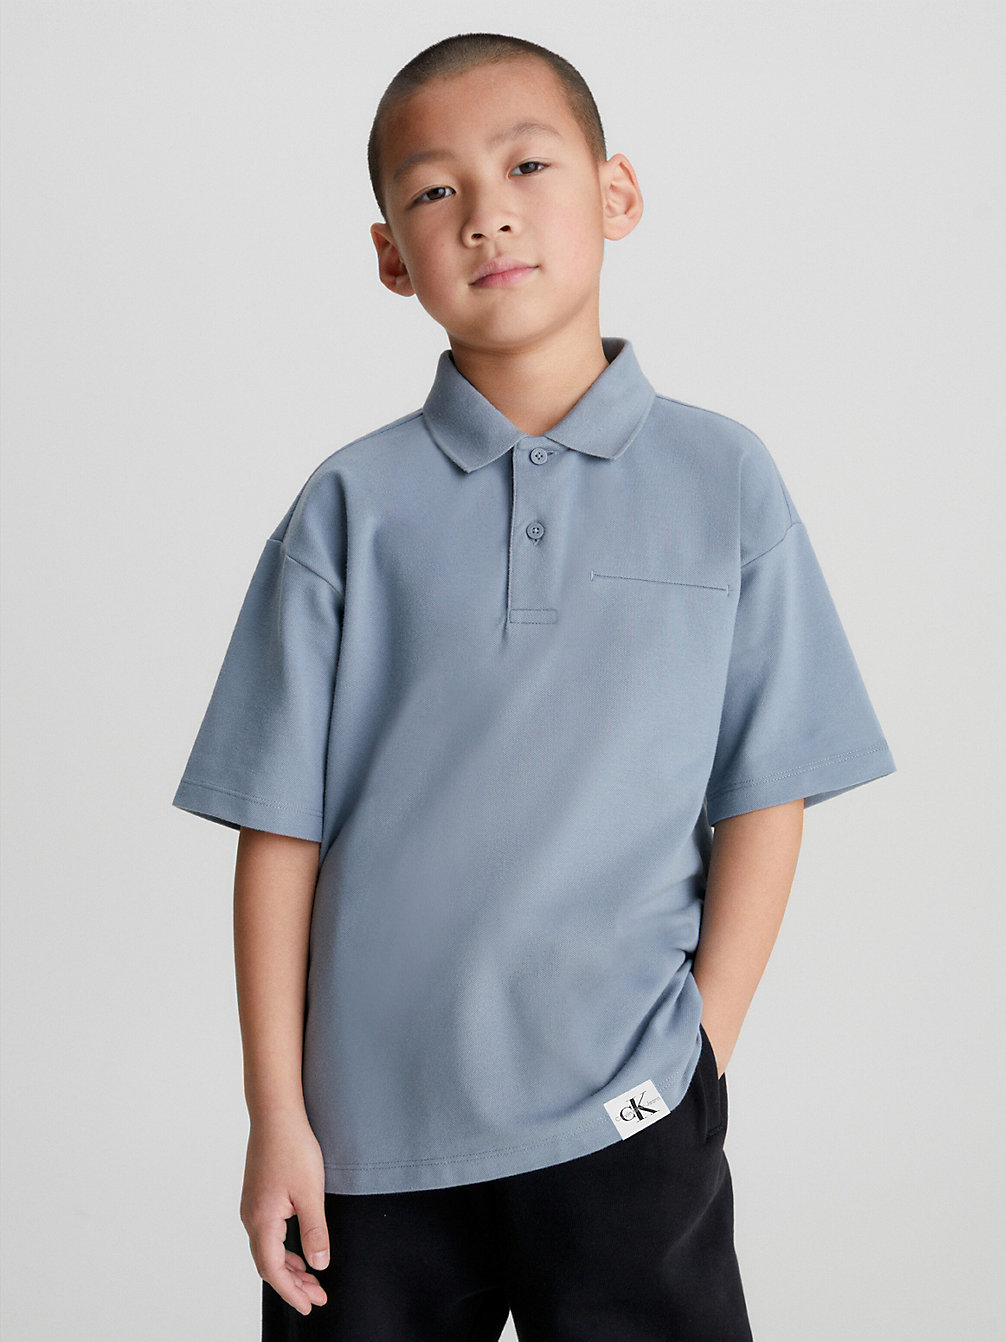 OVERCAST GREY Piqué-Poloshirt undefined Jungen Calvin Klein